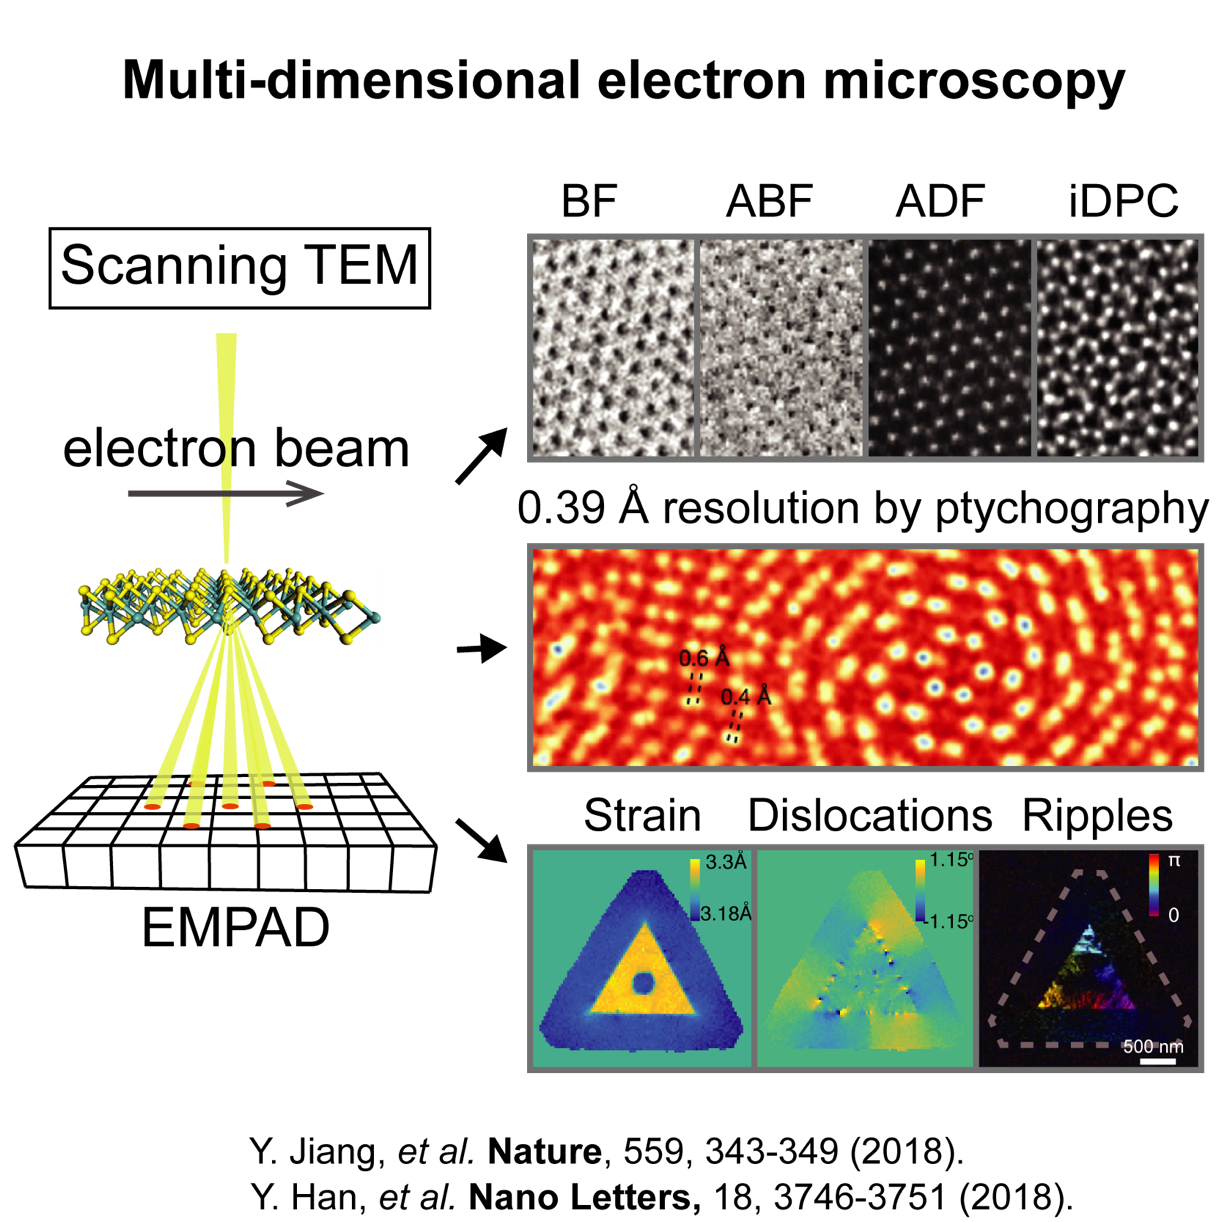 Multi-dimensional electron microscopy